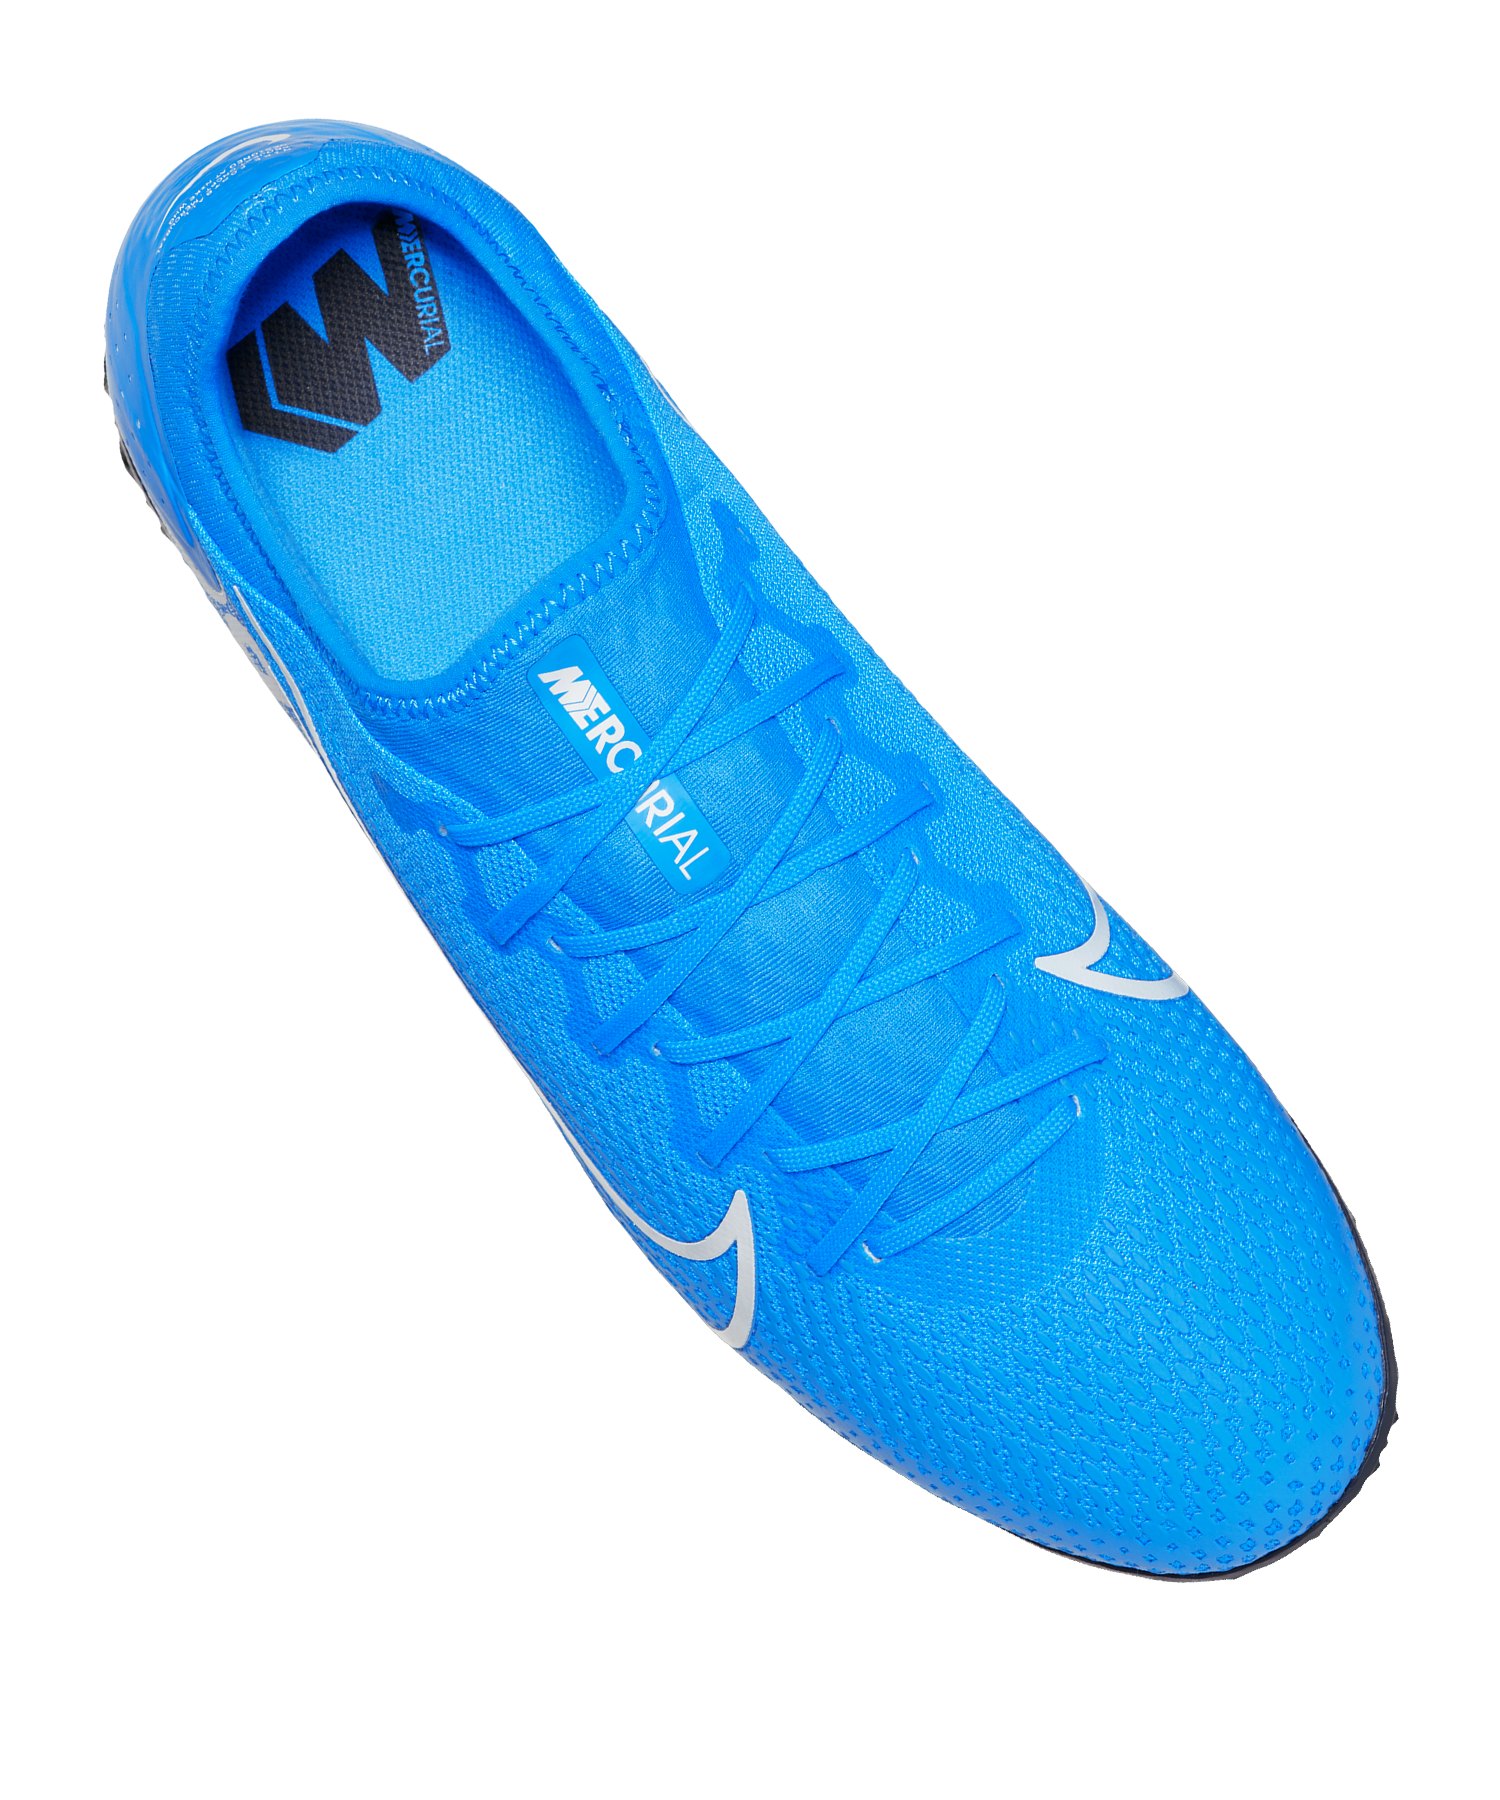 Size 7 Nike Mercurial Vapor 13 Pro FG Soccer Cleats .eBay